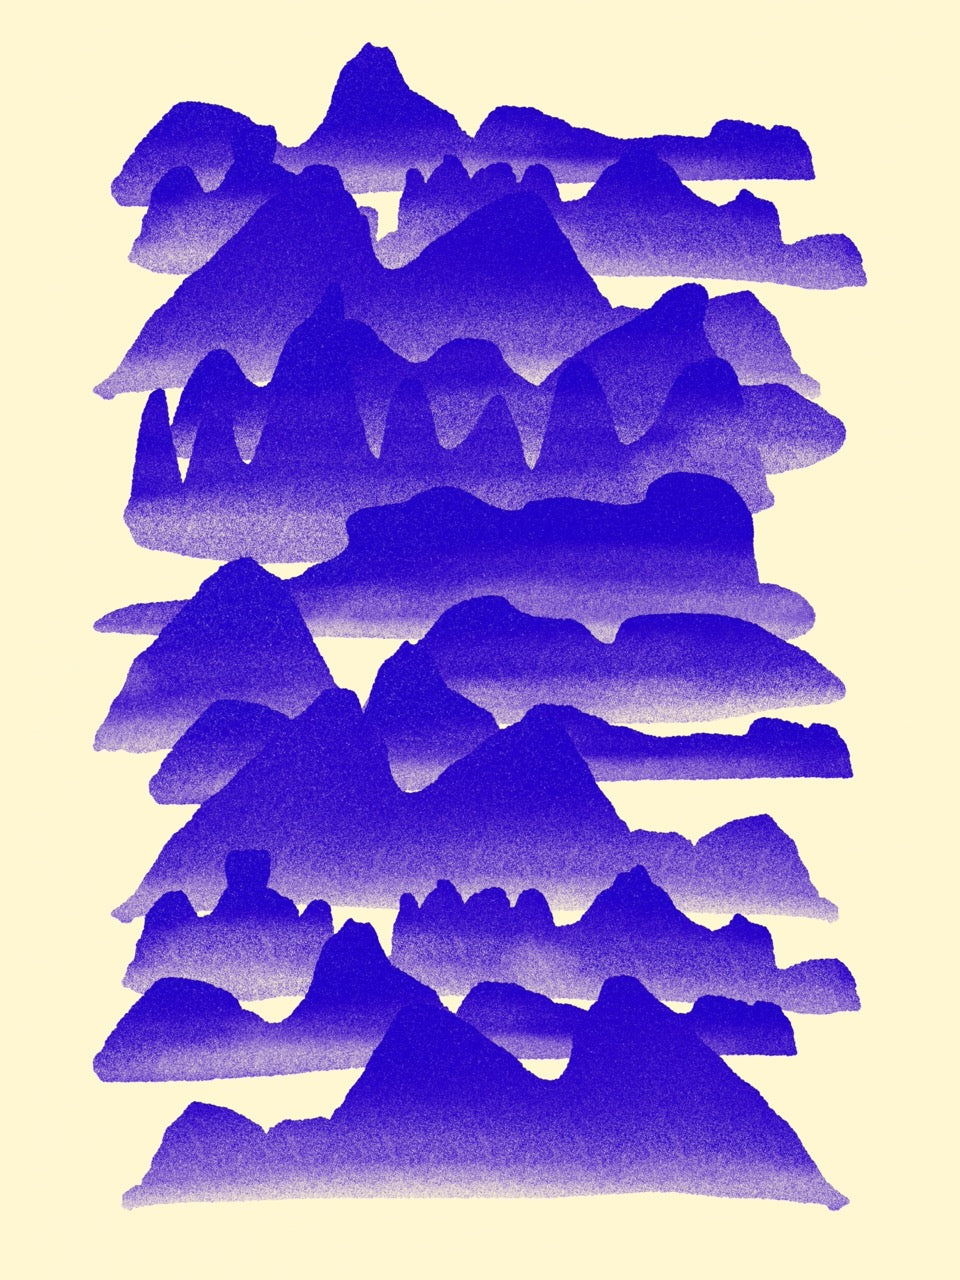 Blue Mountains - Fergus Hannant